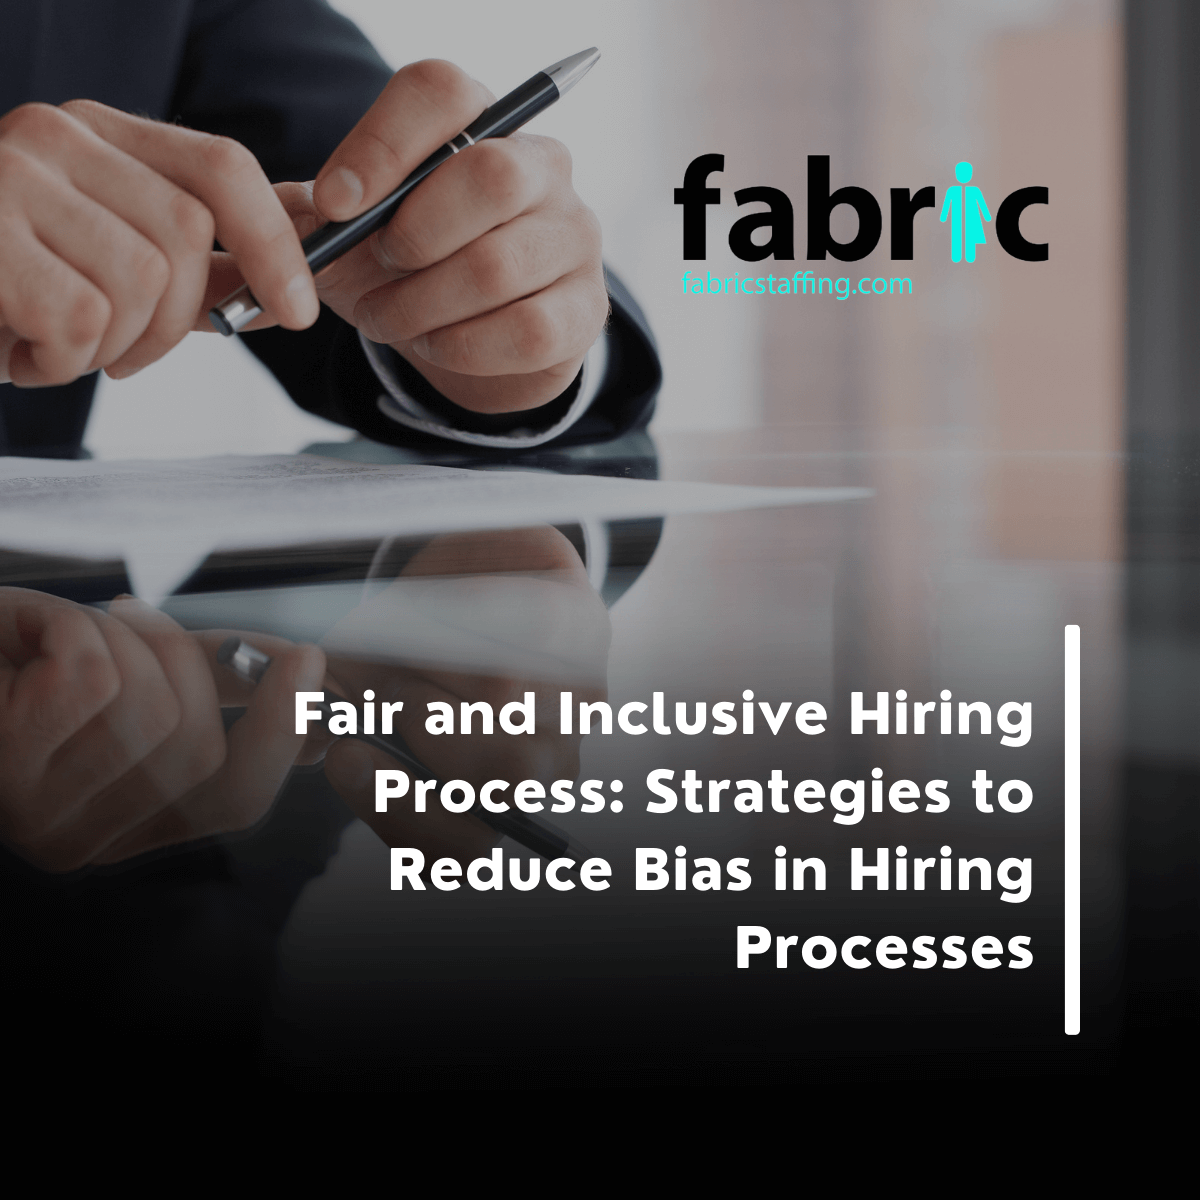 Fair and Inclusive Hiring Process: Strategies to Reduce Bias in Hiring Processes